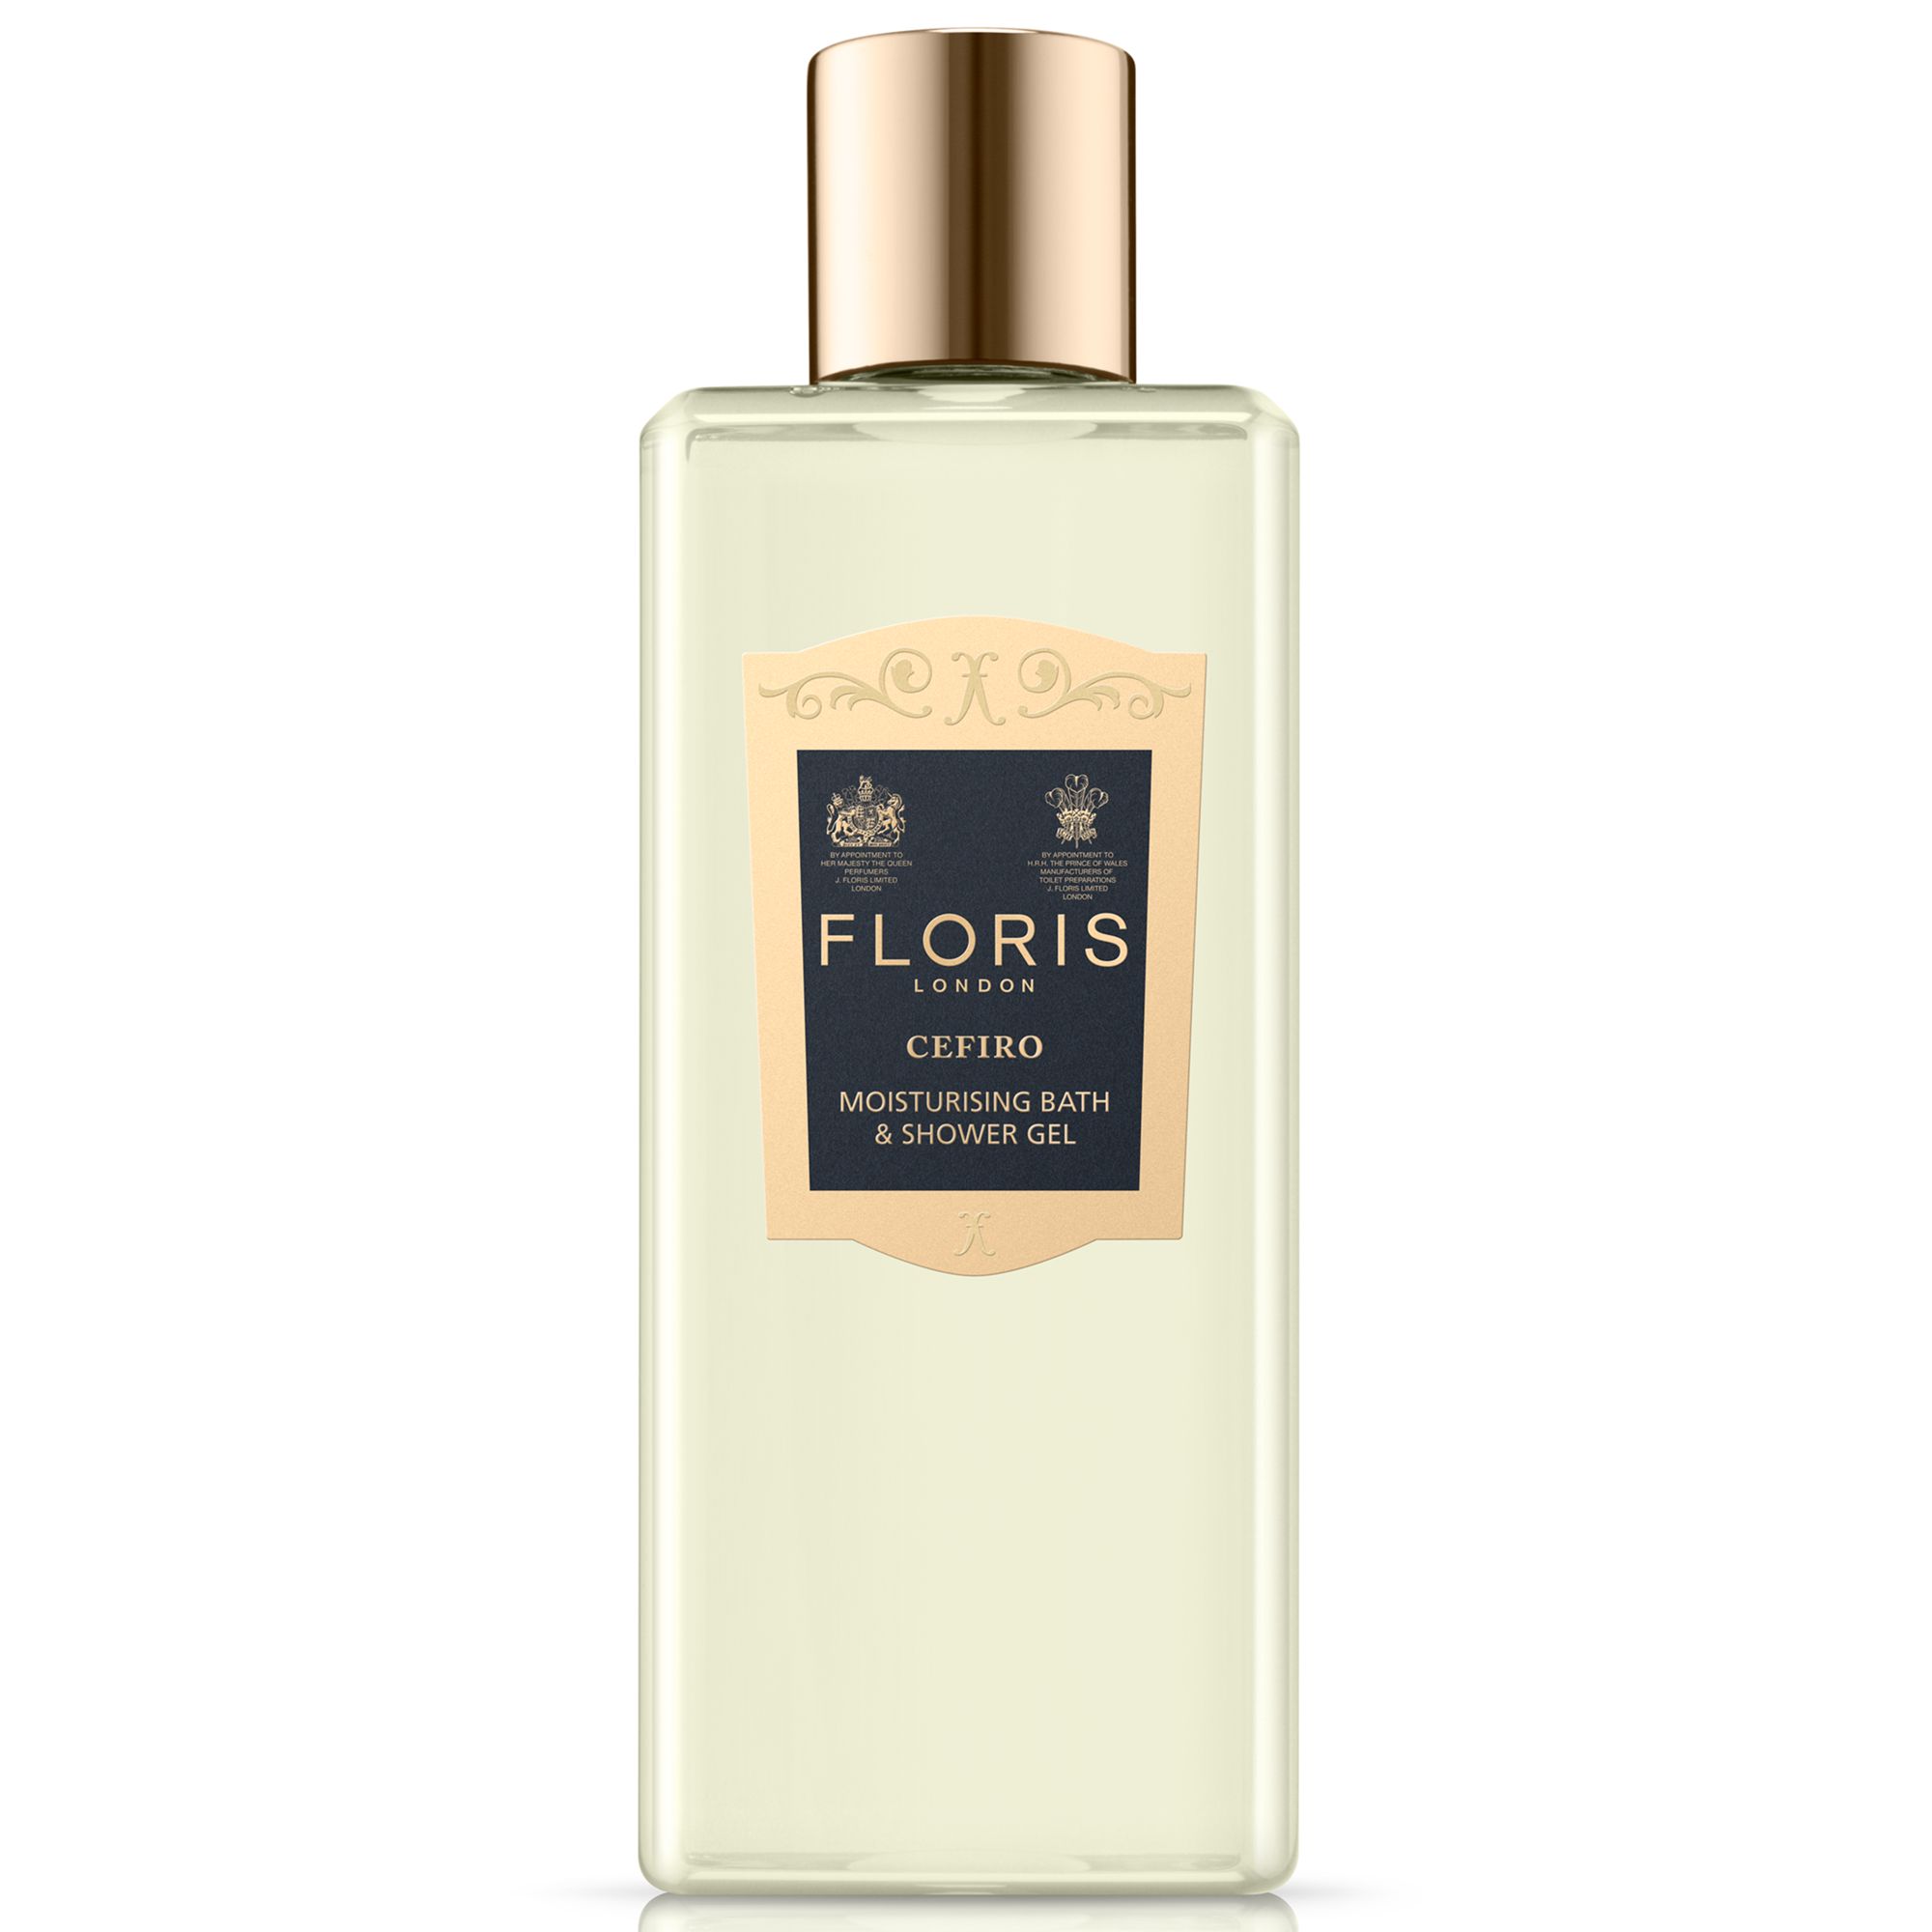 Floris Cefiro Moisturising Bath and Shower Gel, 250ml